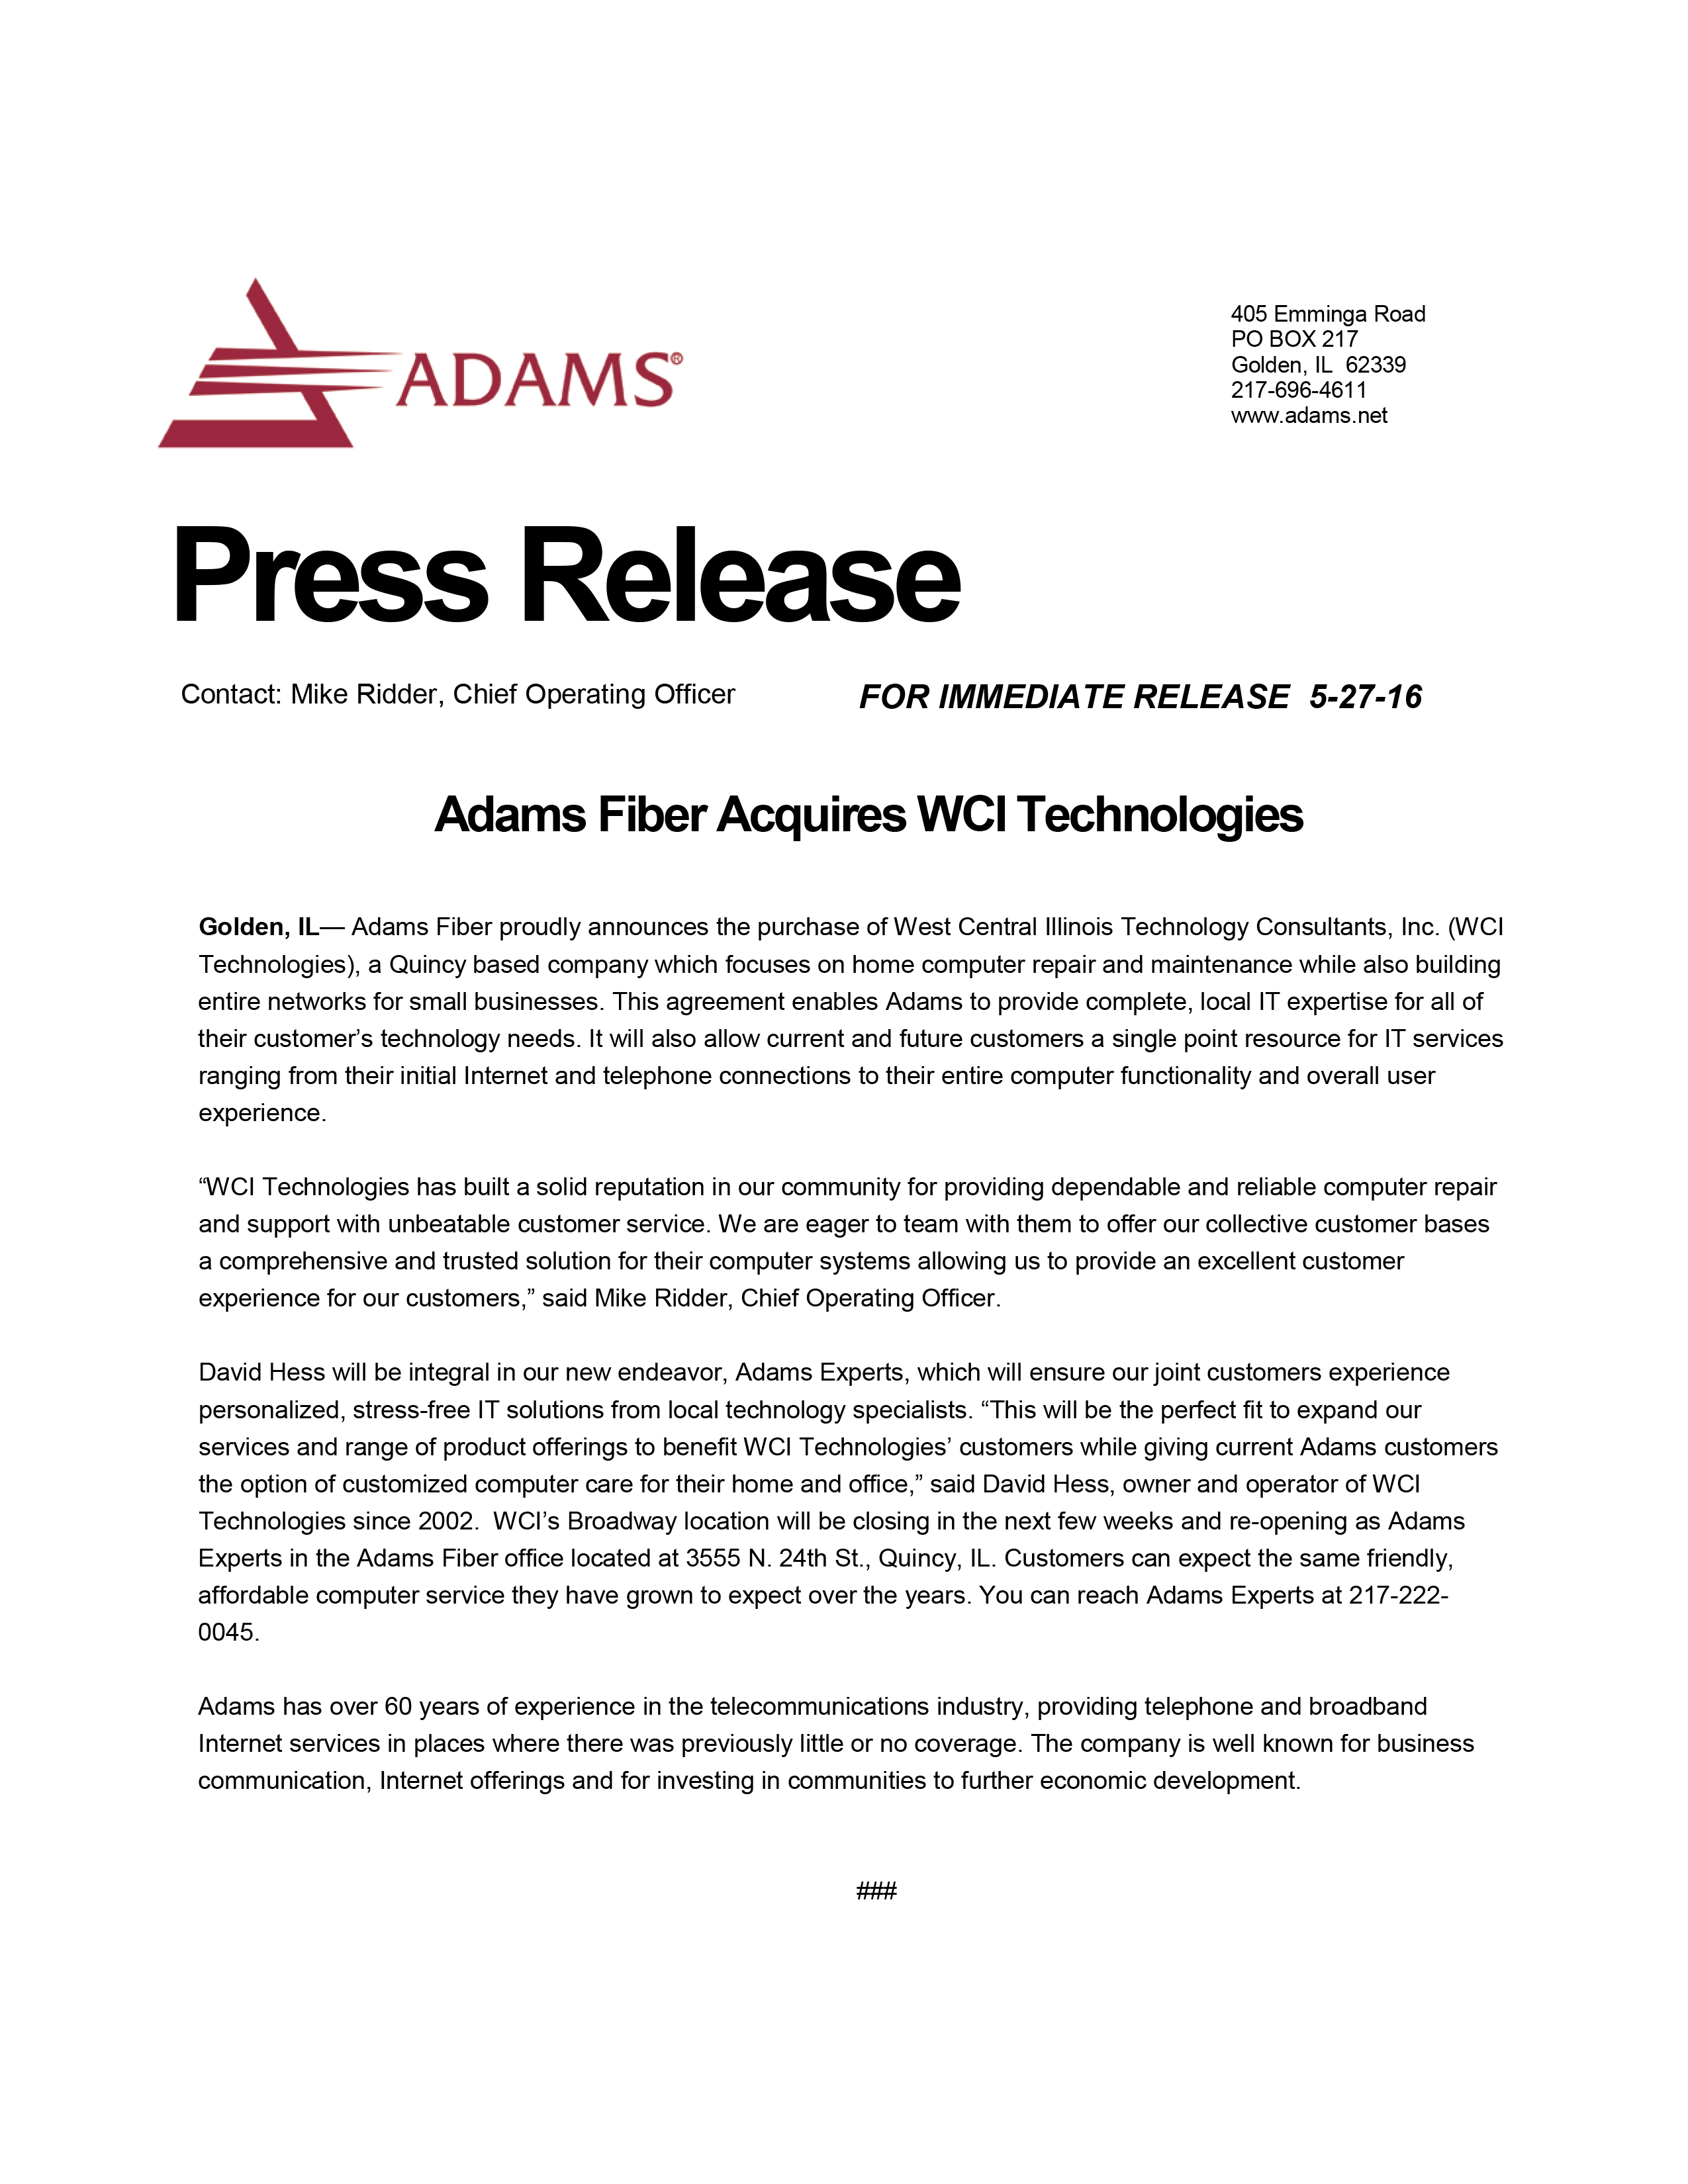 Adams Fiber Acquires WCI Technologies